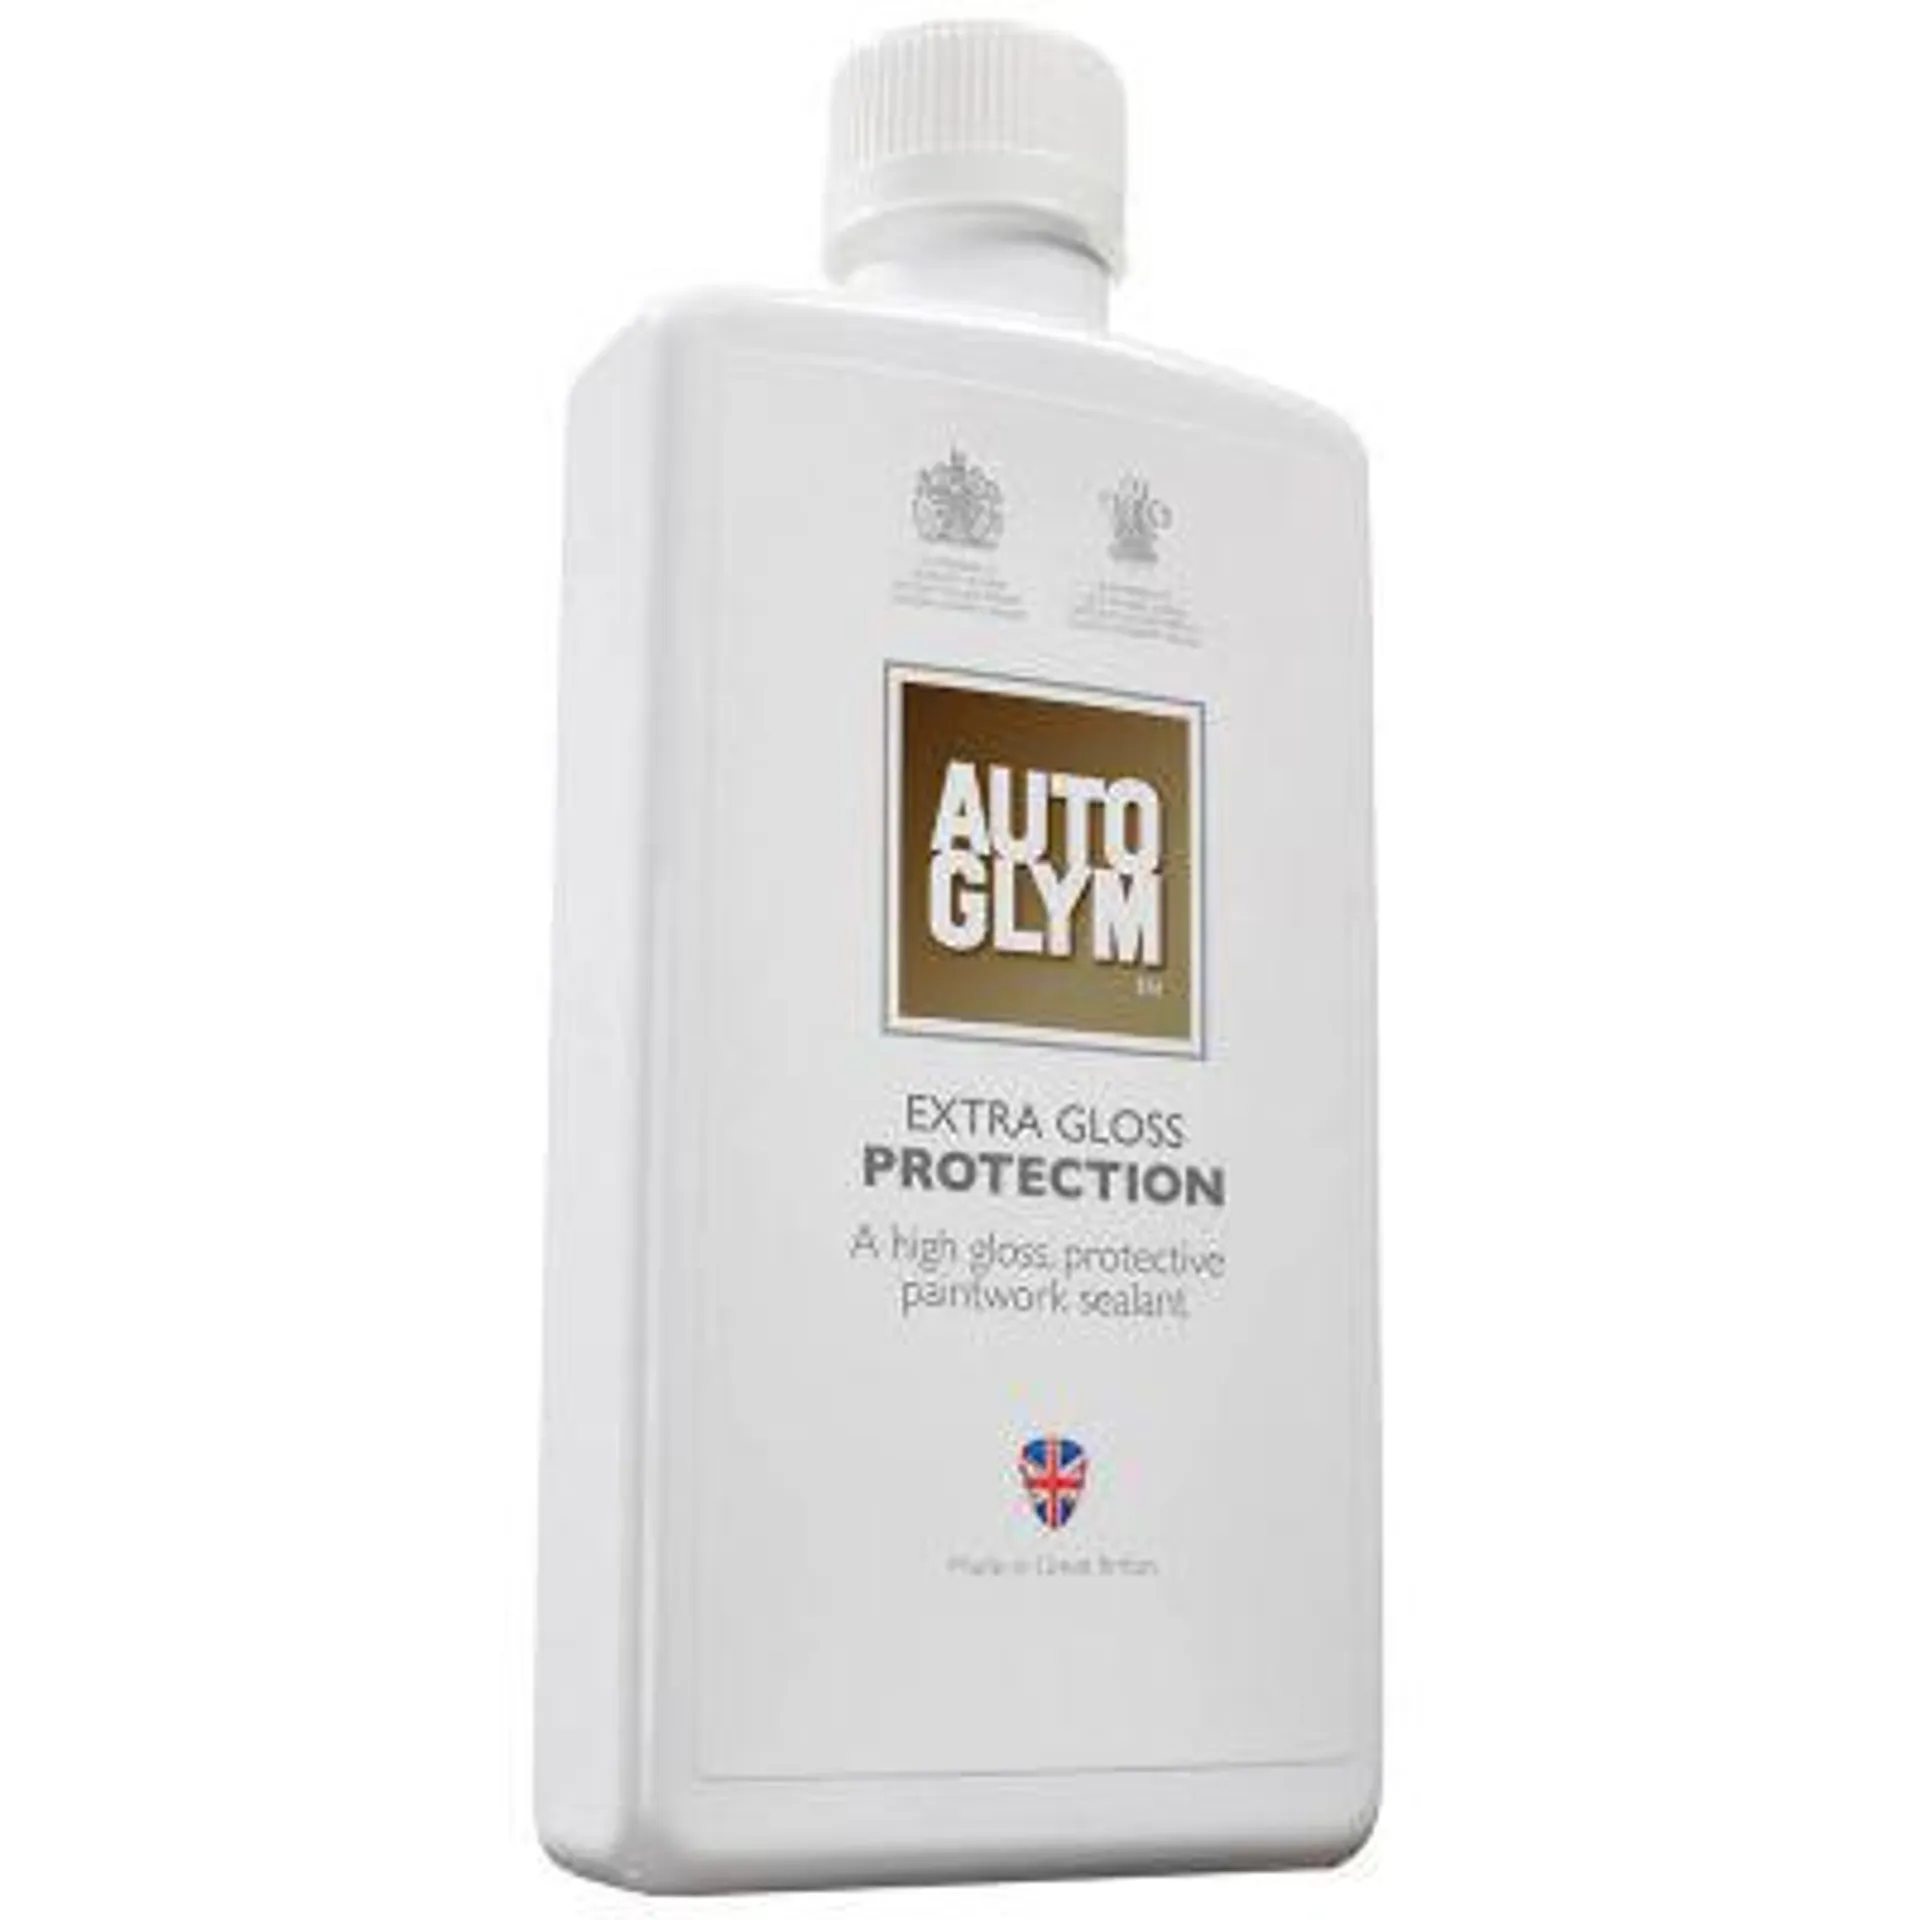 autoglym extra gloss protection 325ml